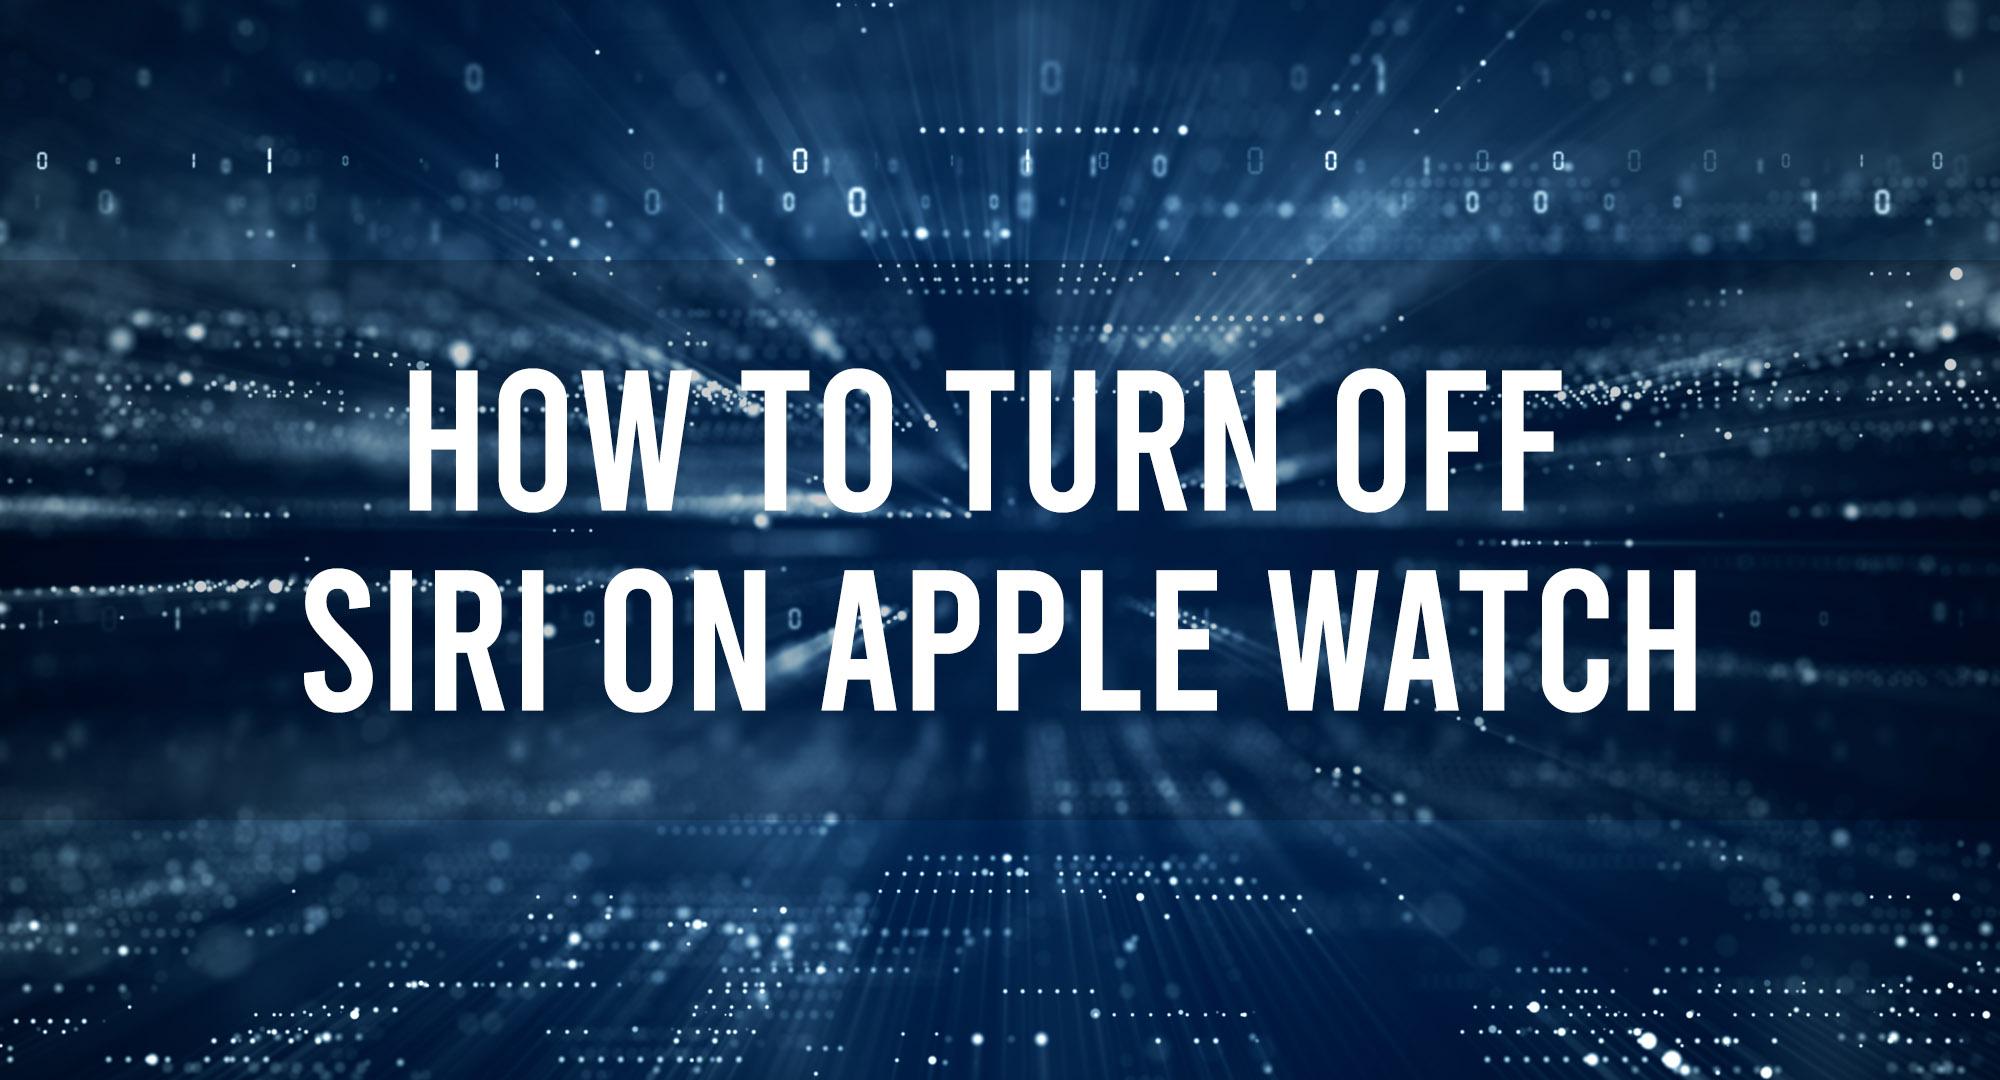 How to turn off siri on apple watch